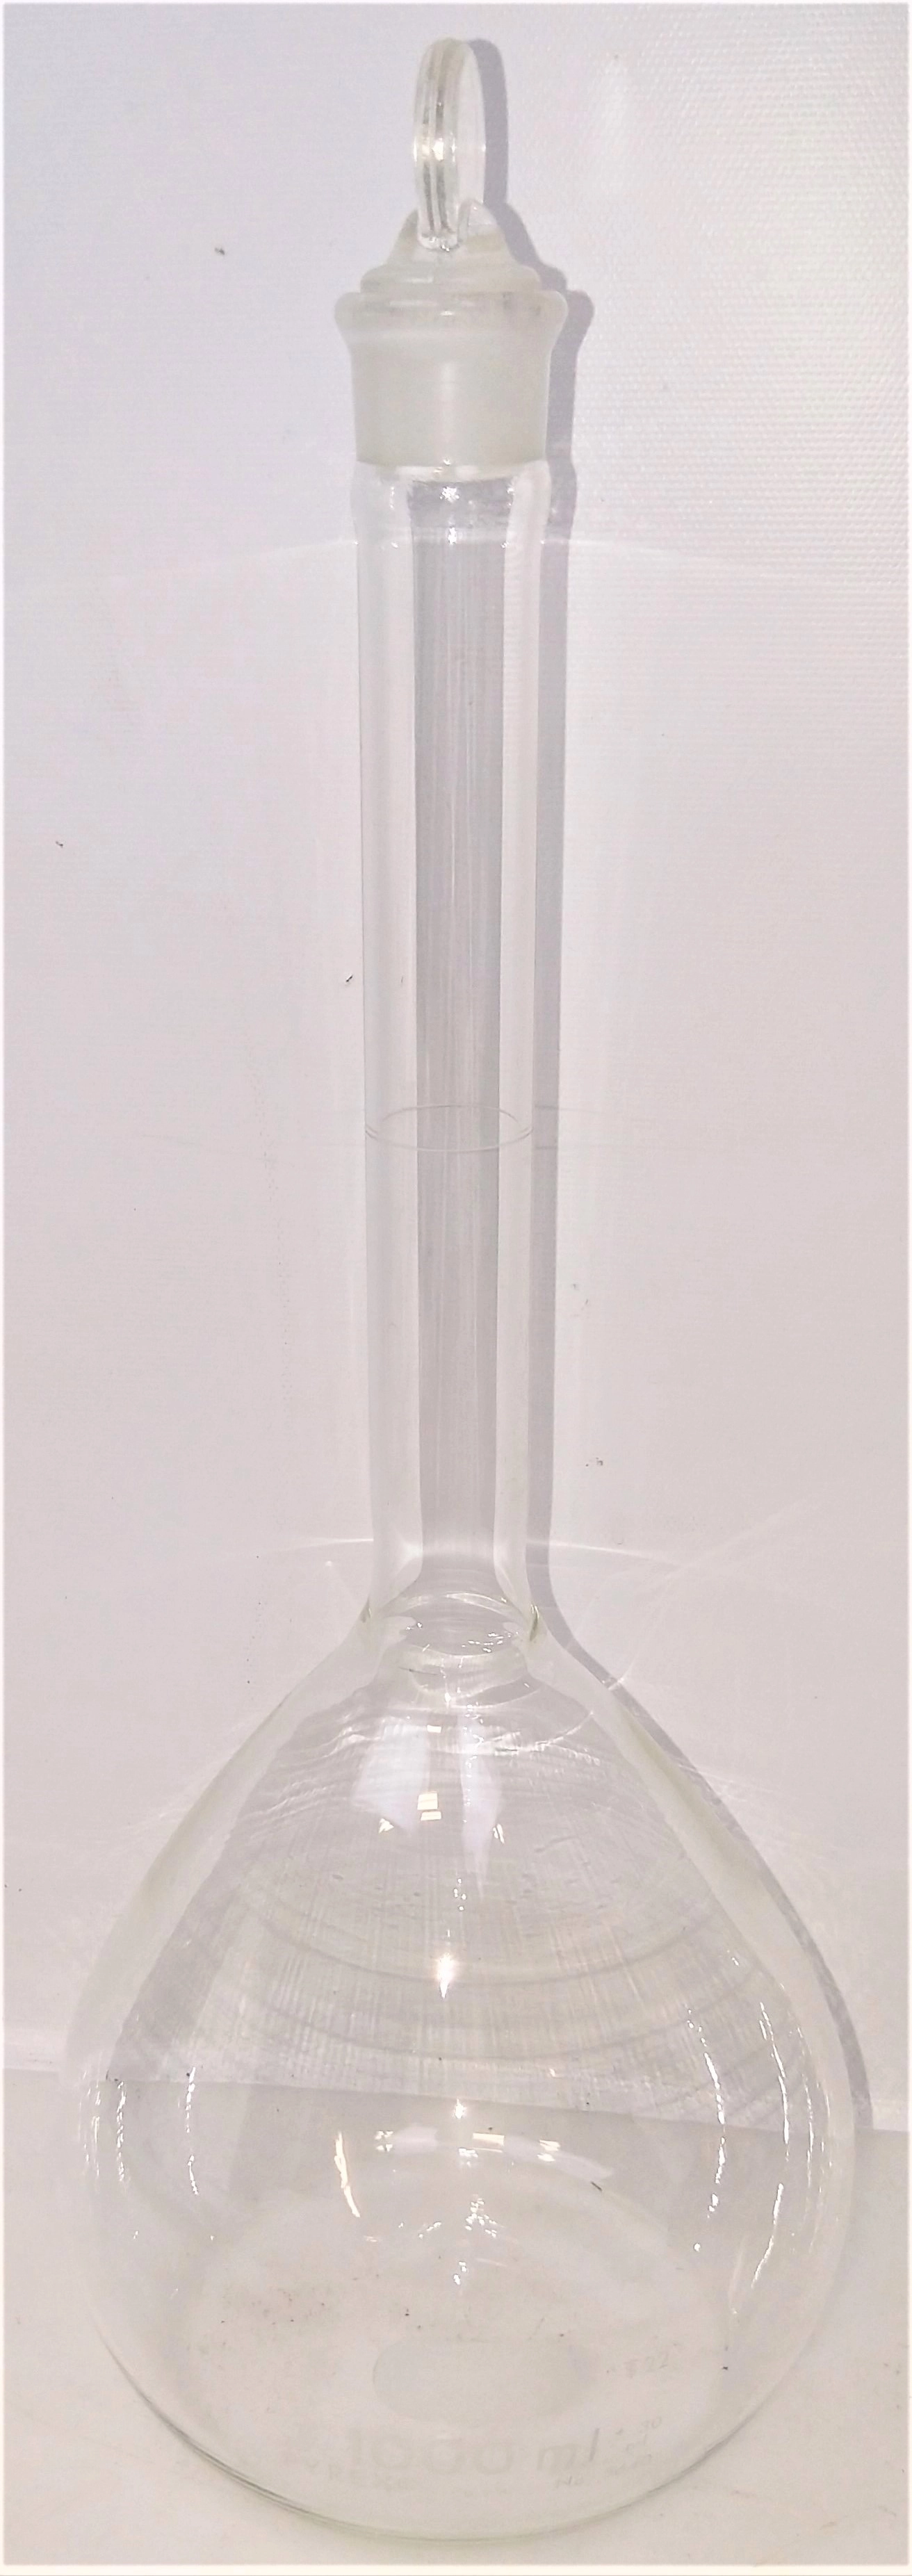 Corning/Kimble/VWR 1000mL Volumetric Flasks - Class A and B